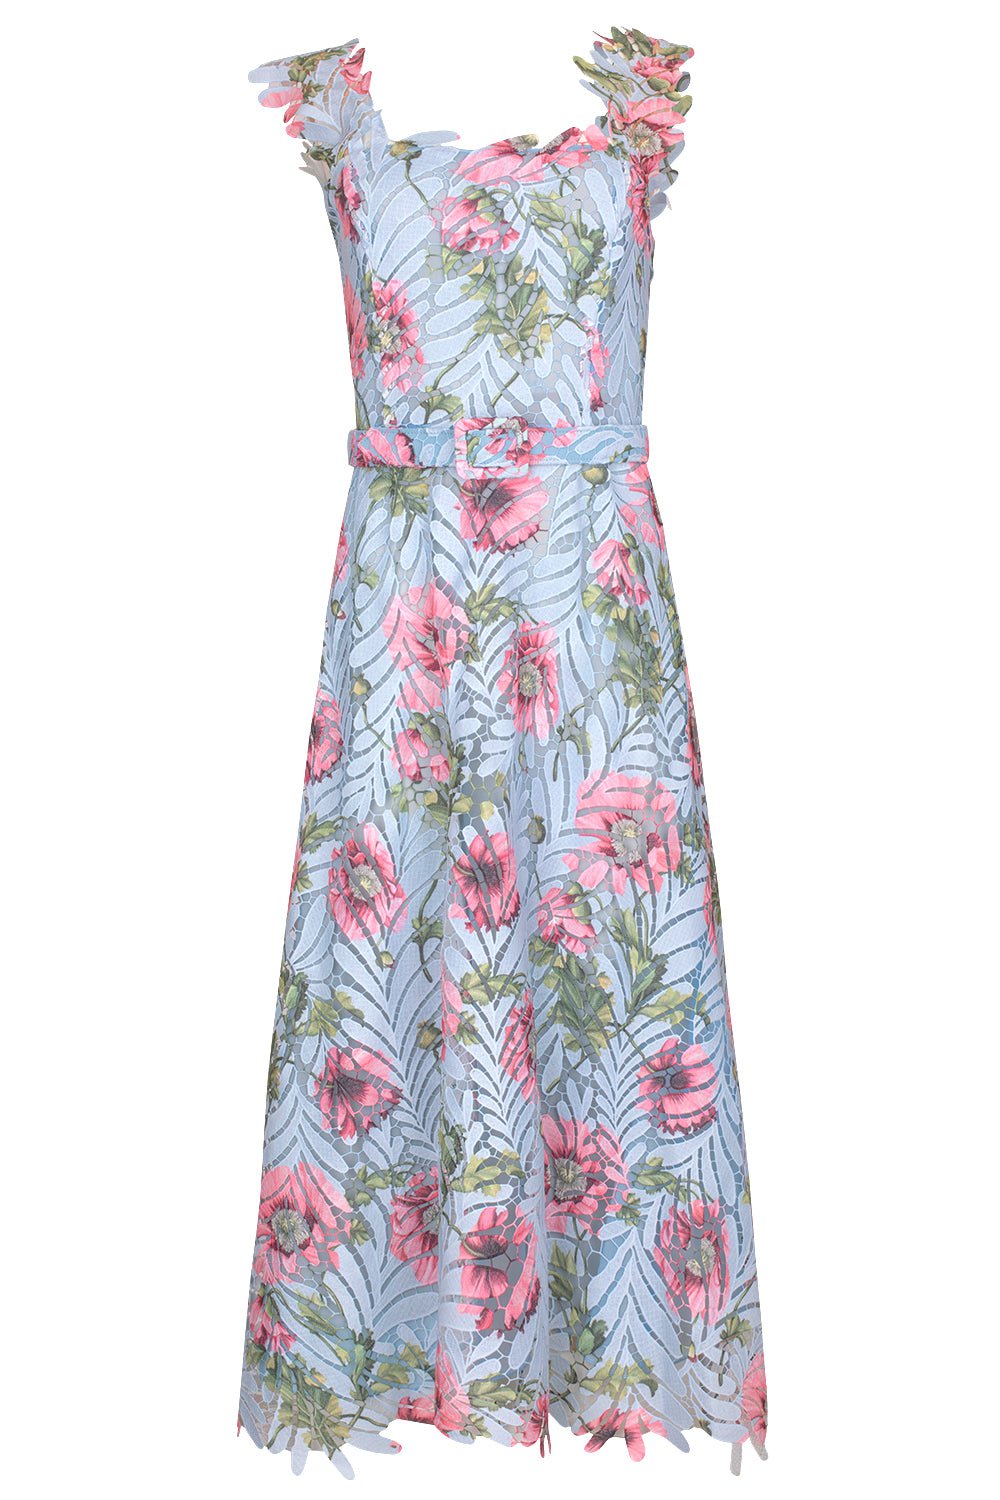 OSCAR DE LA RENTA-Sleeveless Poppies Printed Dress-